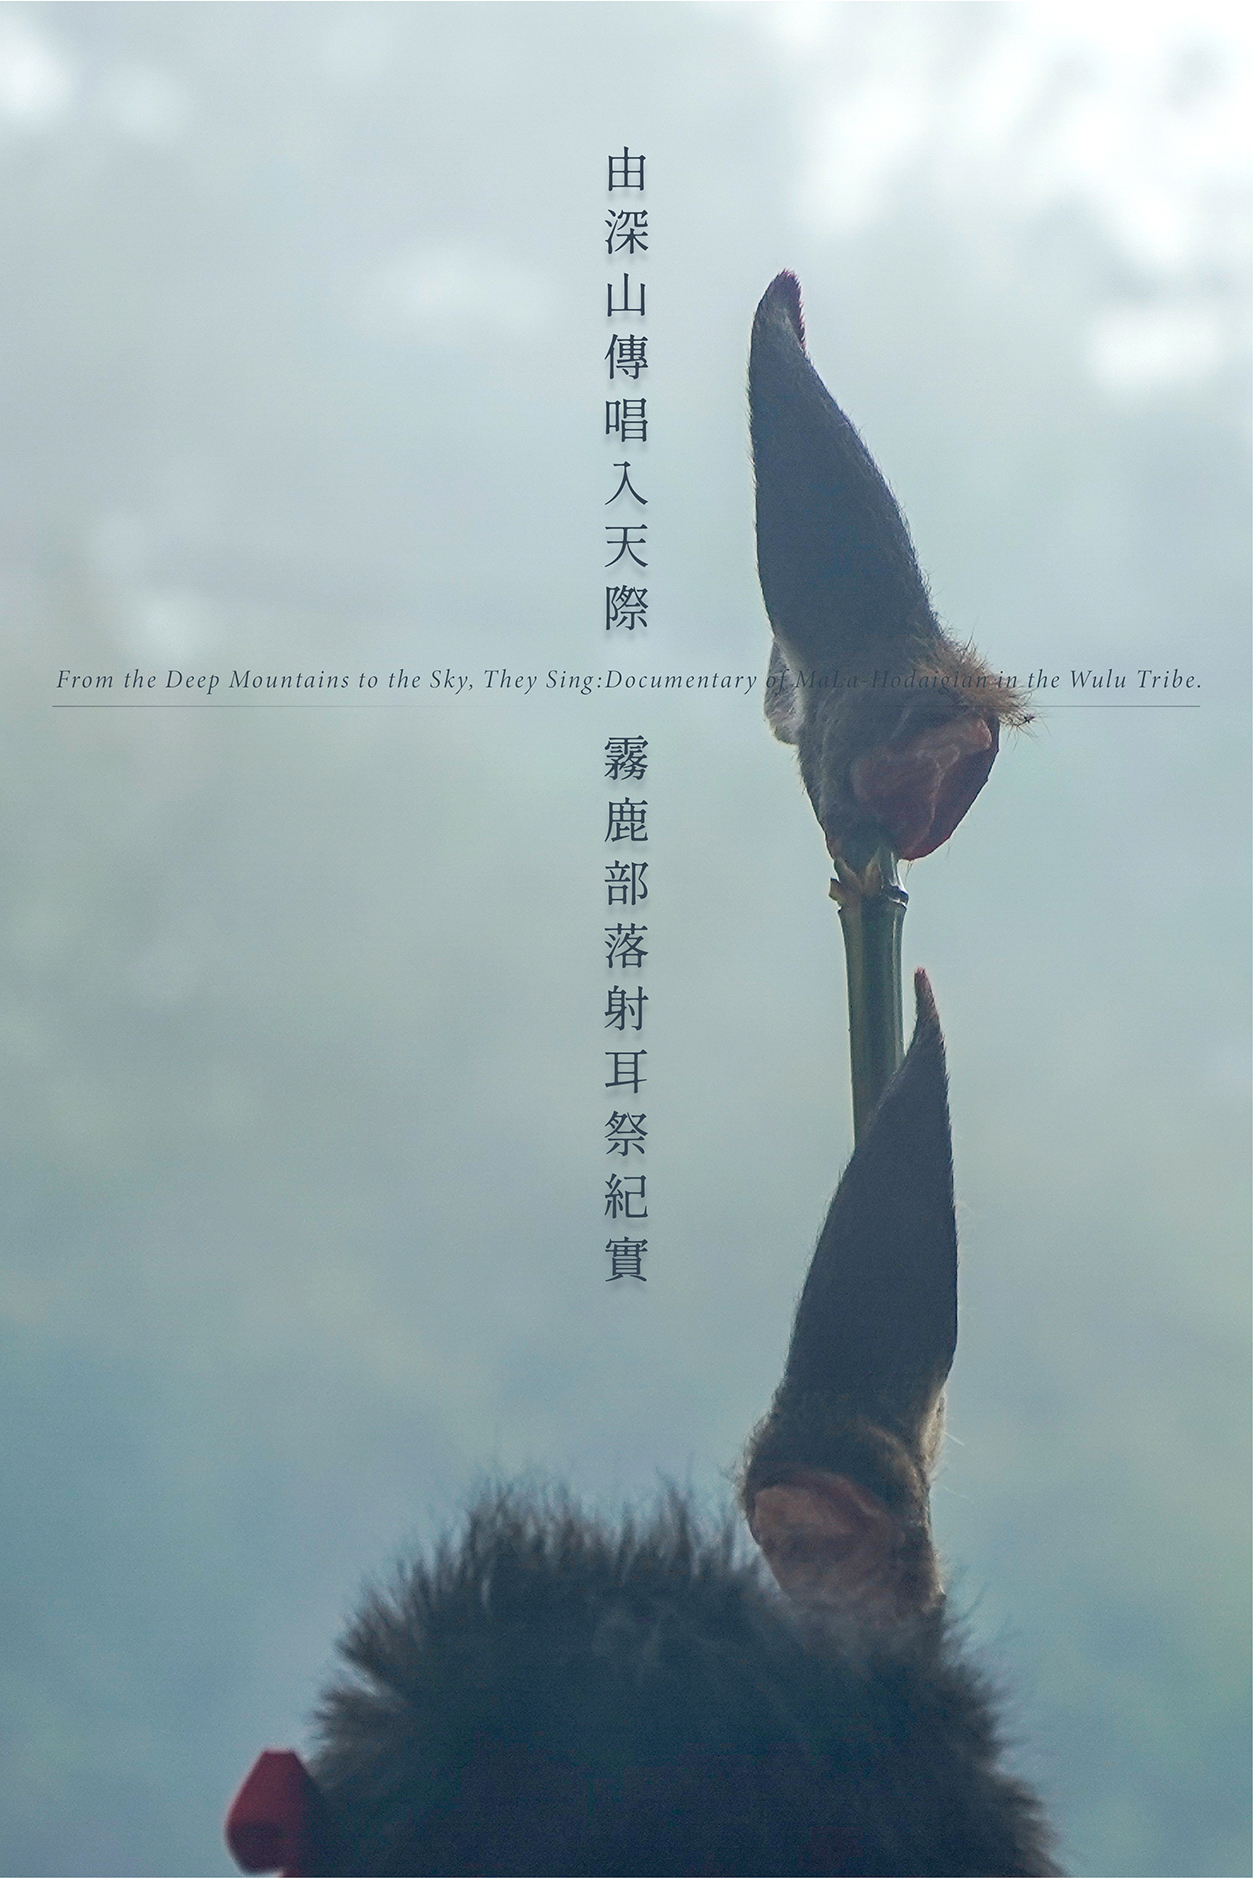 由深山傳唱入天際 霧鹿部落射耳祭紀實 From the Deep Mountains to the Sky, They Sing:   Documentary of MaLa-Hodaigian in the Wulu Tribe.